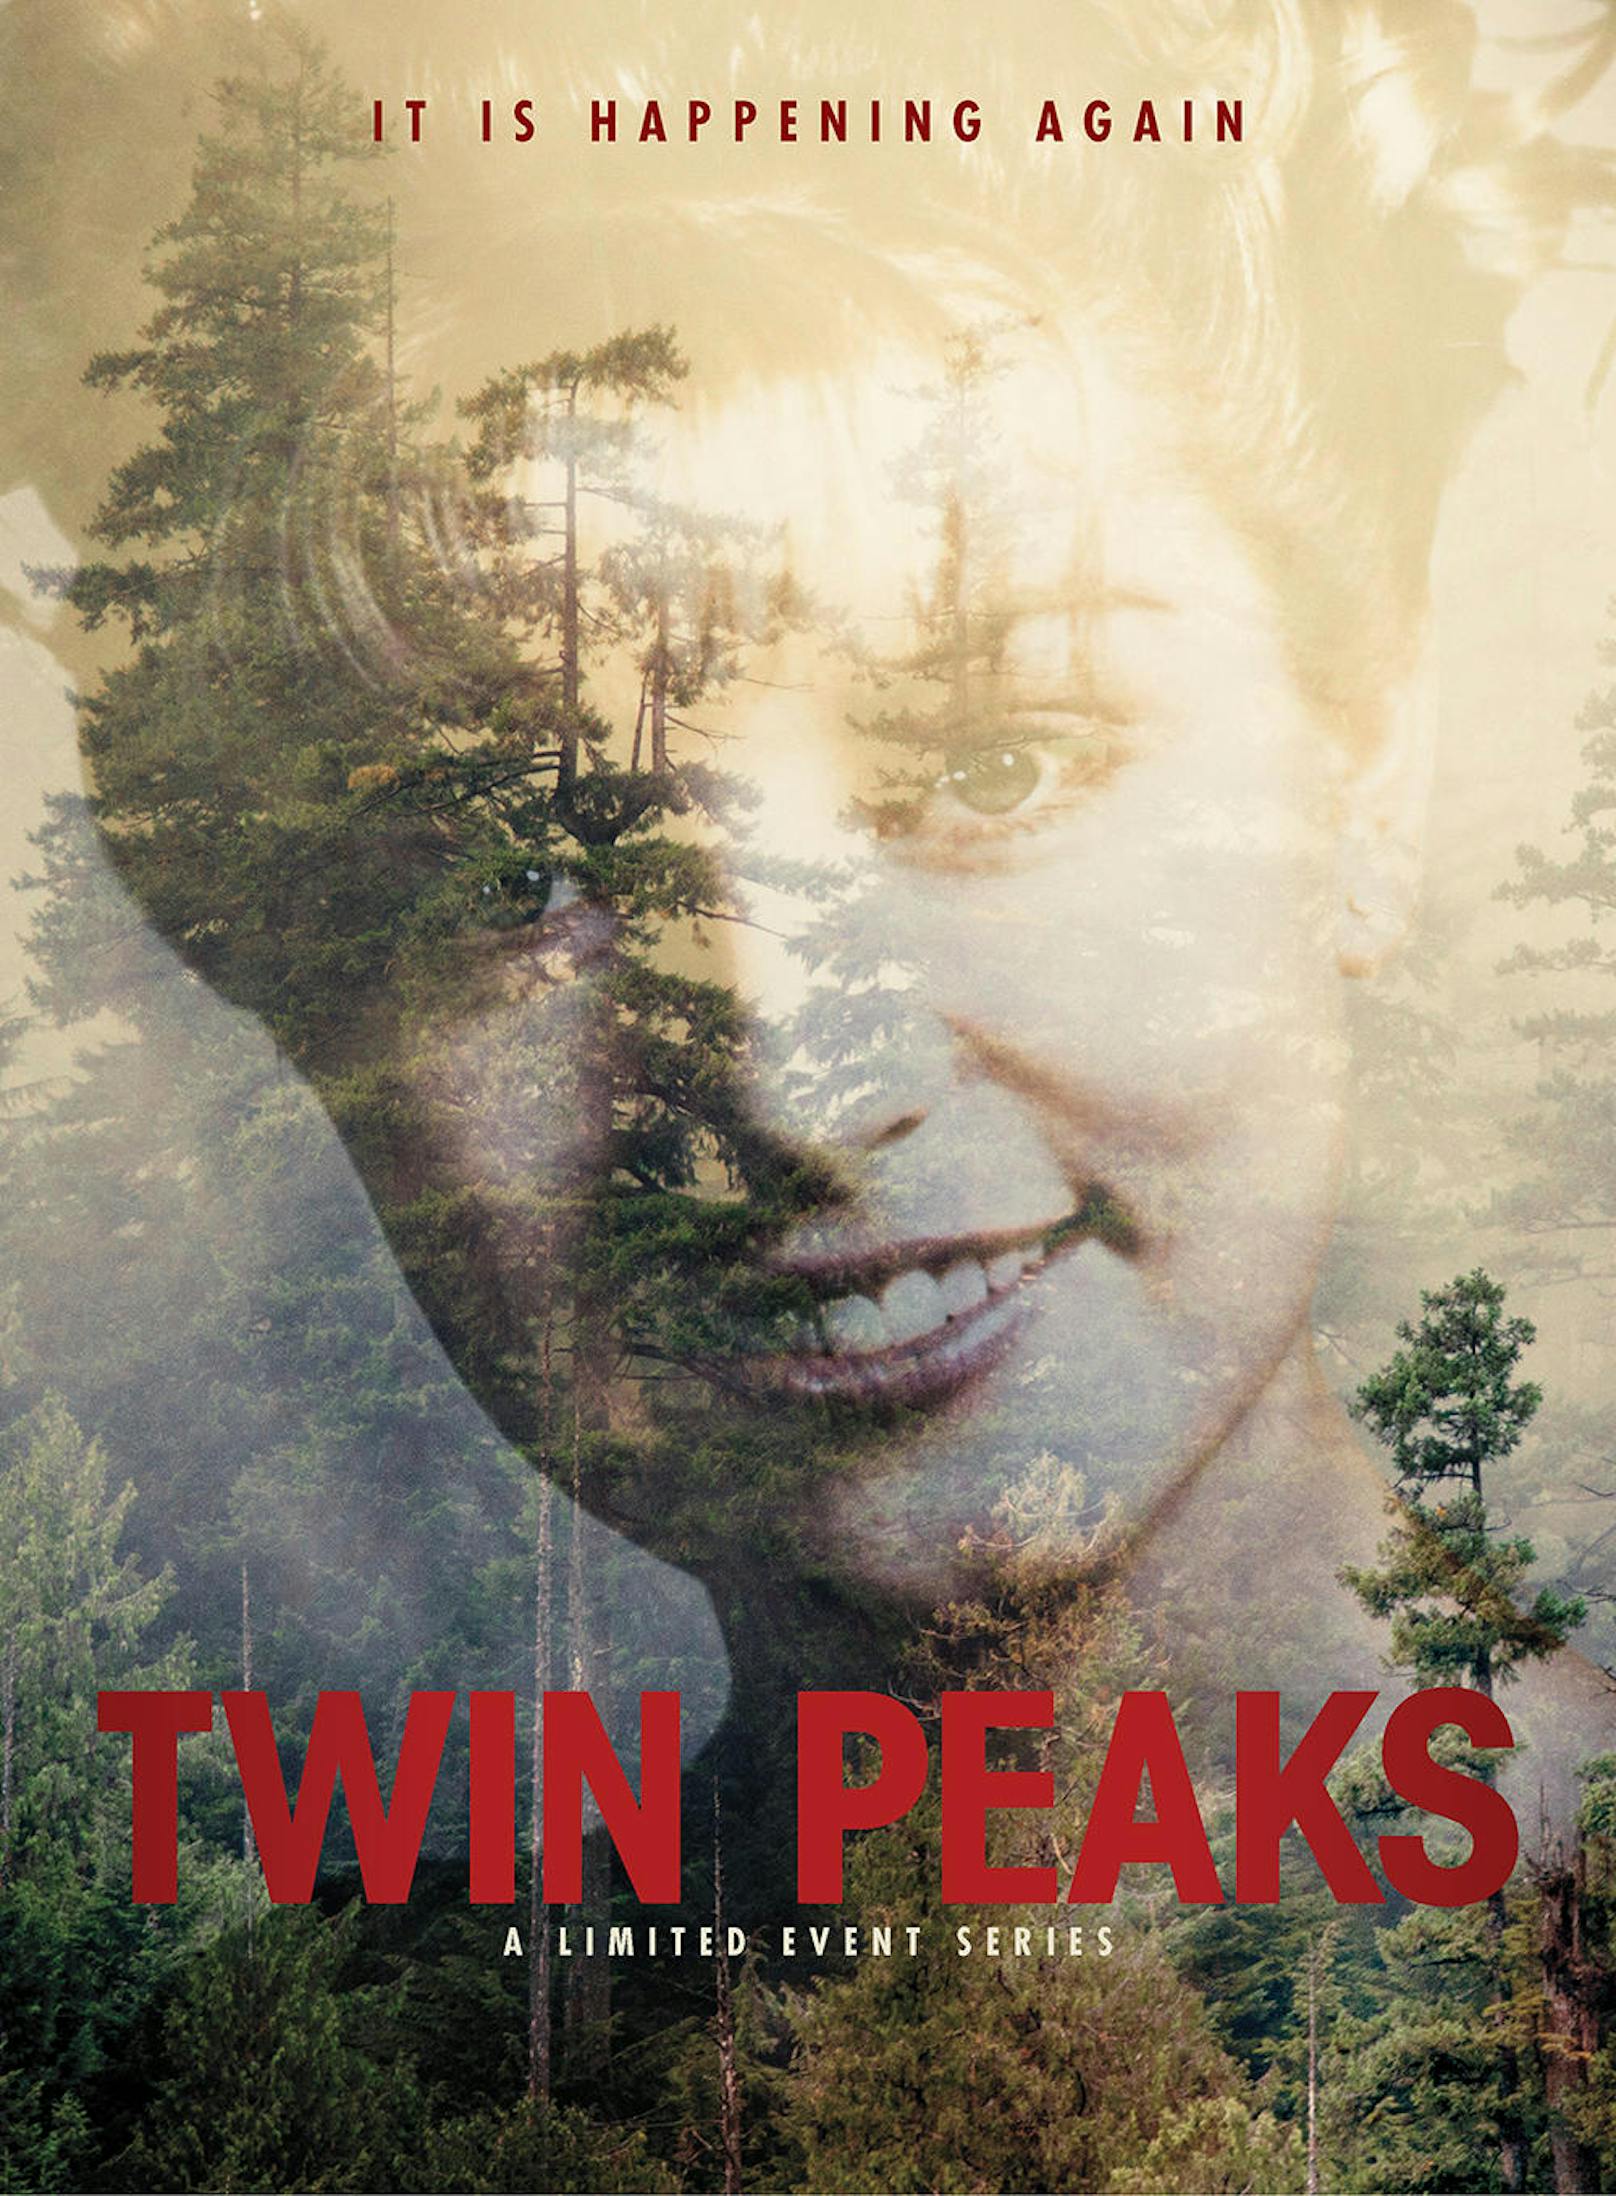 Plakat vom "Twin Peaks"-Comeback